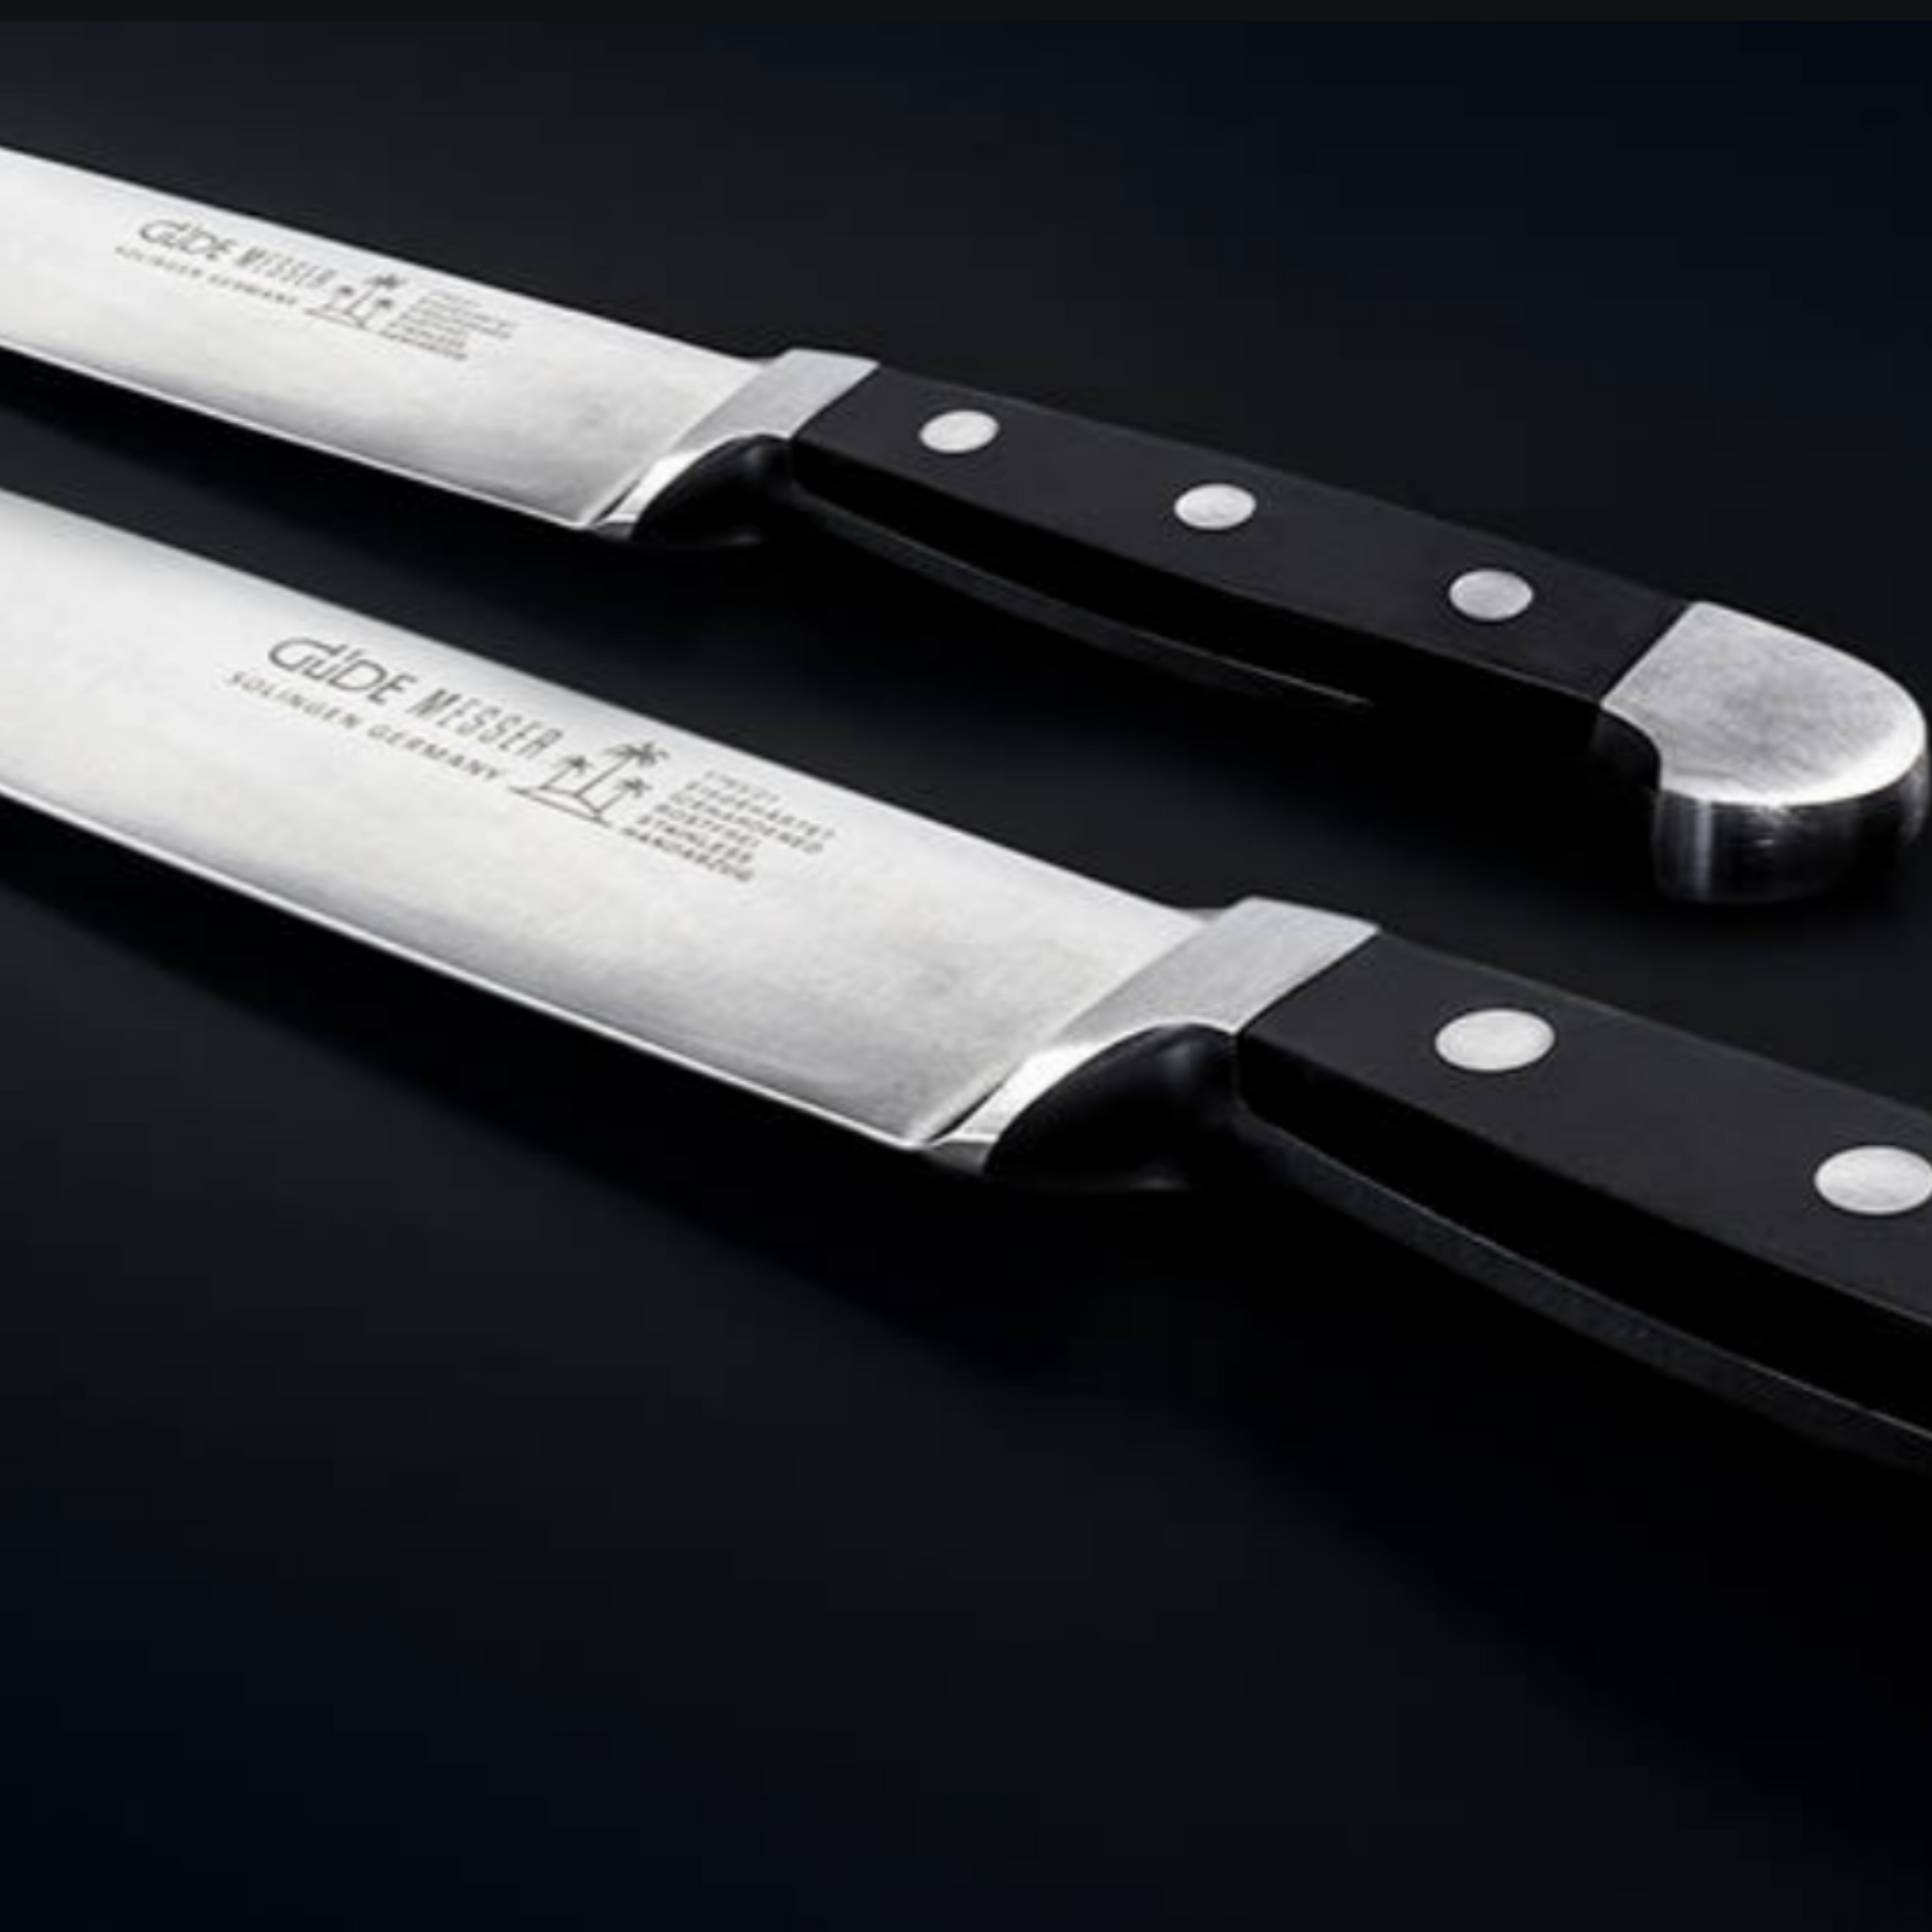 Gude Alpha Series Forged Double Bolster Steak Knife 4 1/2",  Black Hostaform Handle and Serrated Blade - GuedeUSA